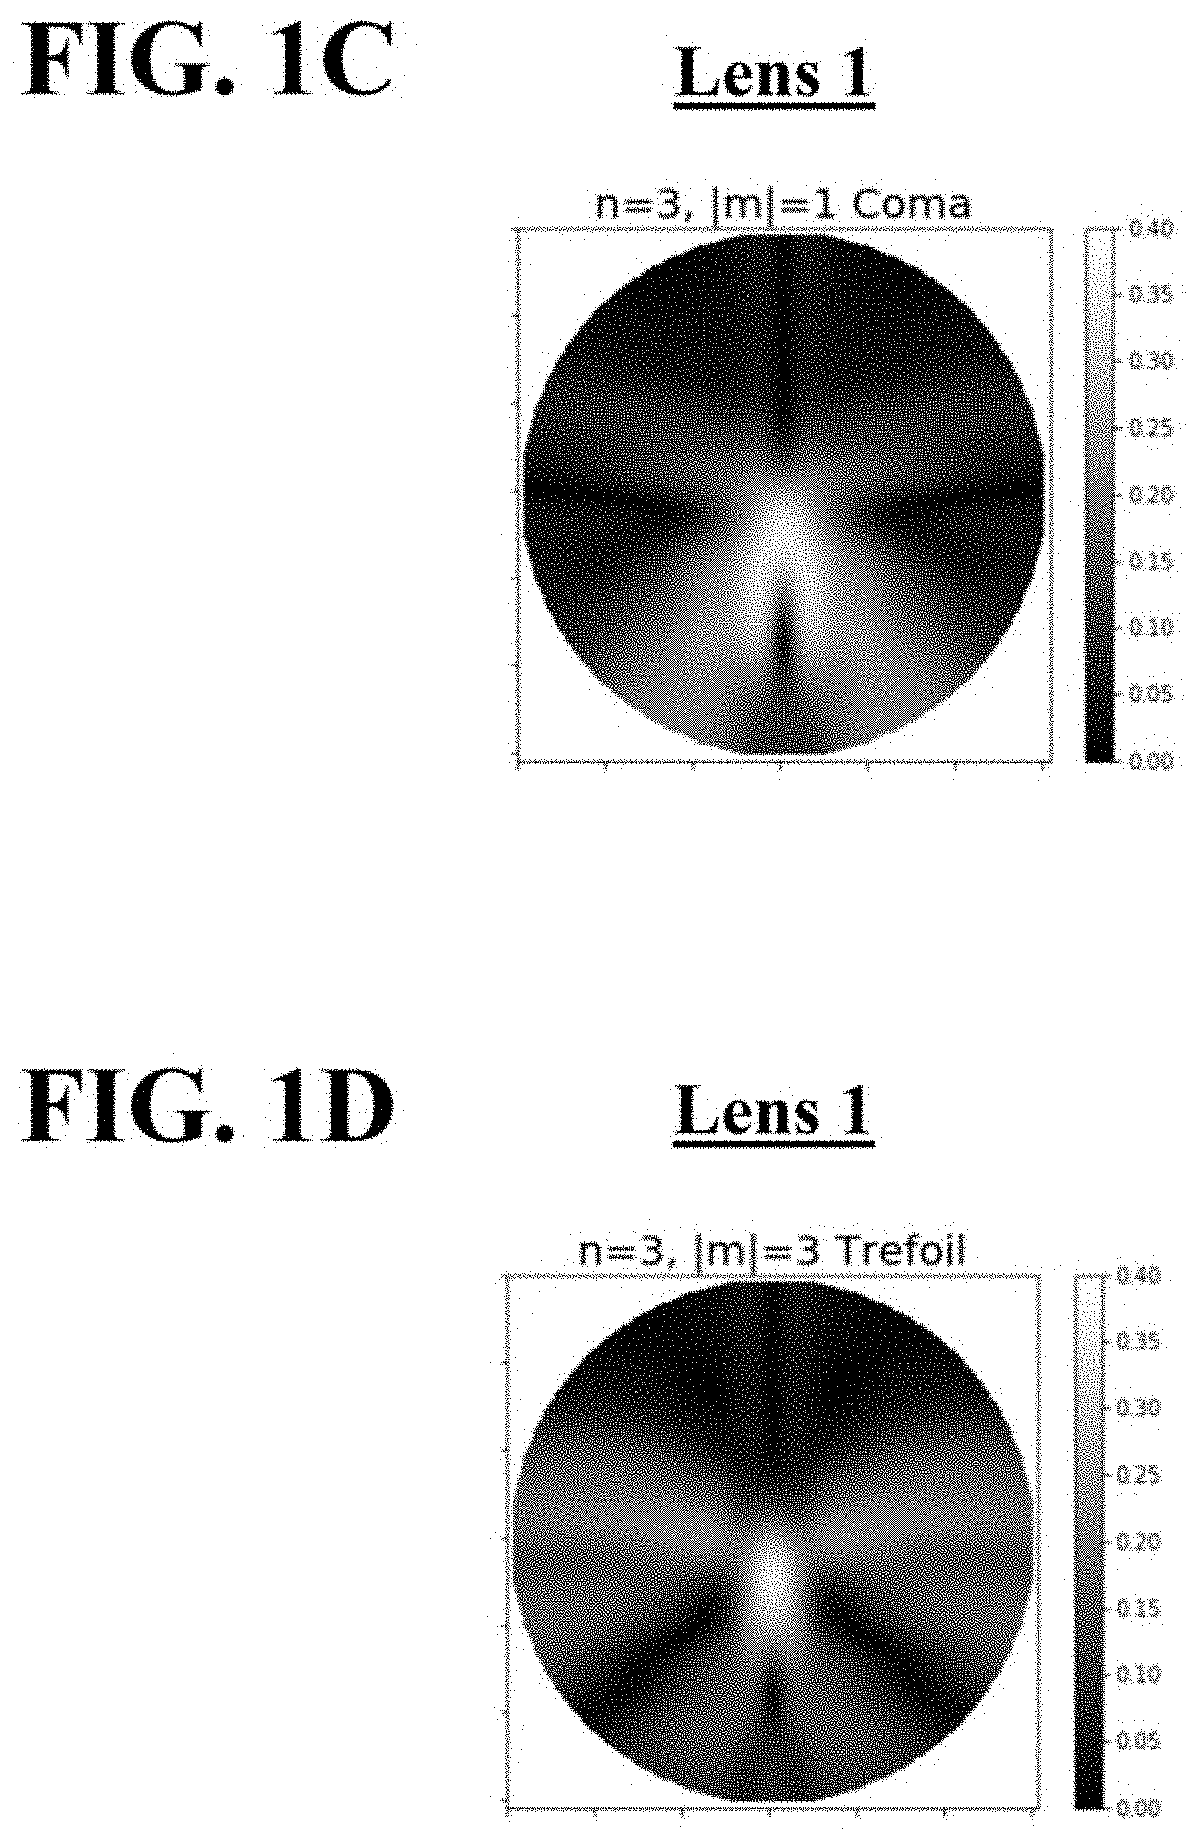 Method for designing spectacle lens, method for manufacturing spectacle lens, and system for designing spectacle lens